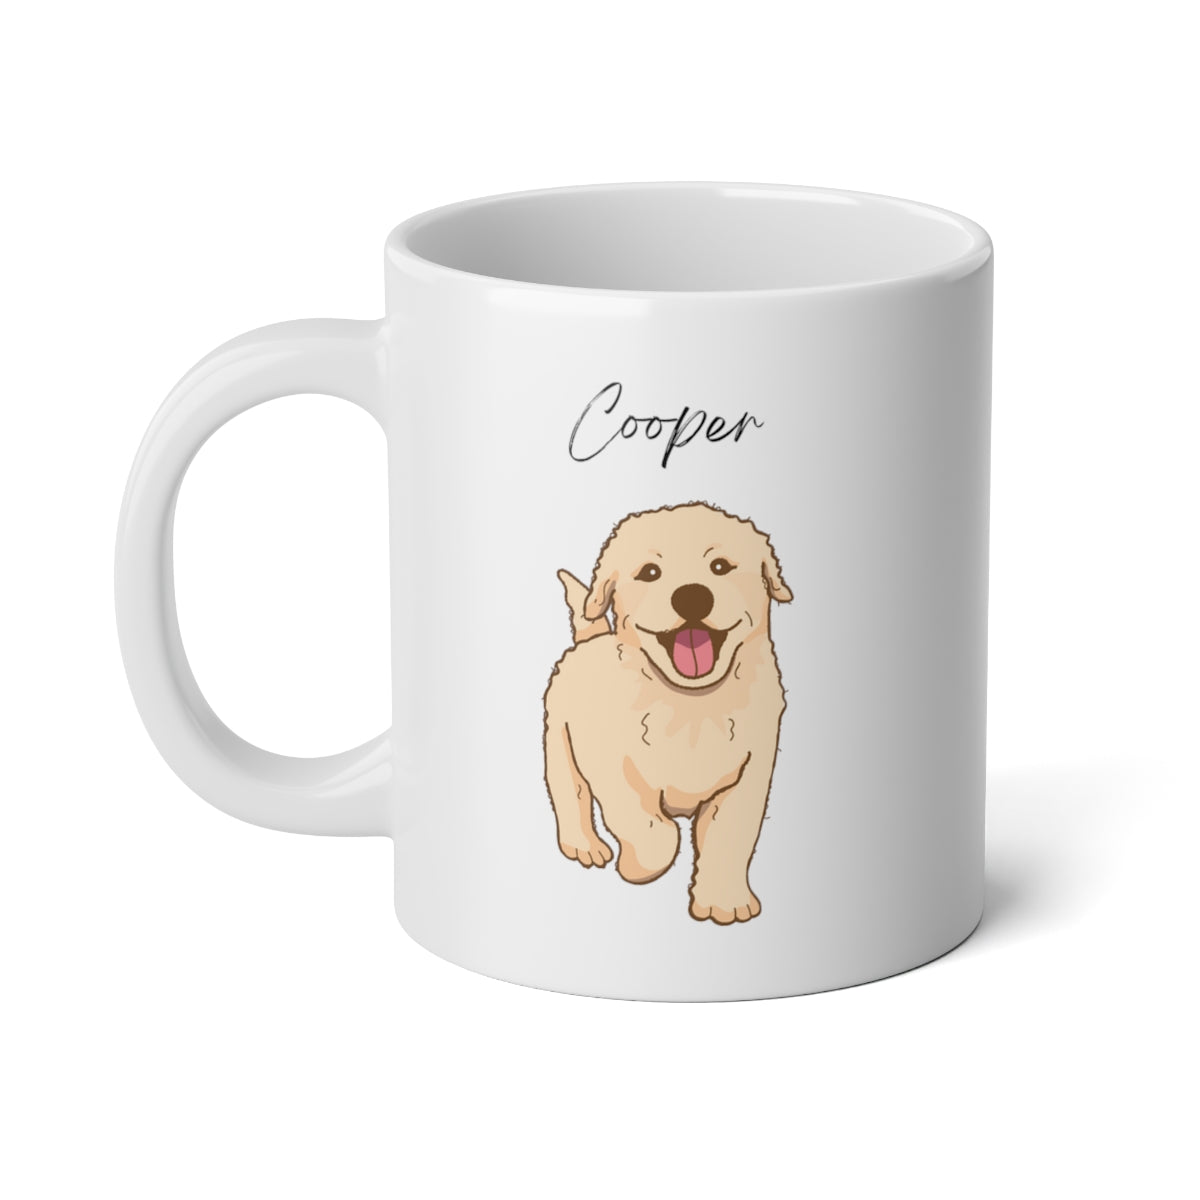 Personalized Mug with Dog Portrait